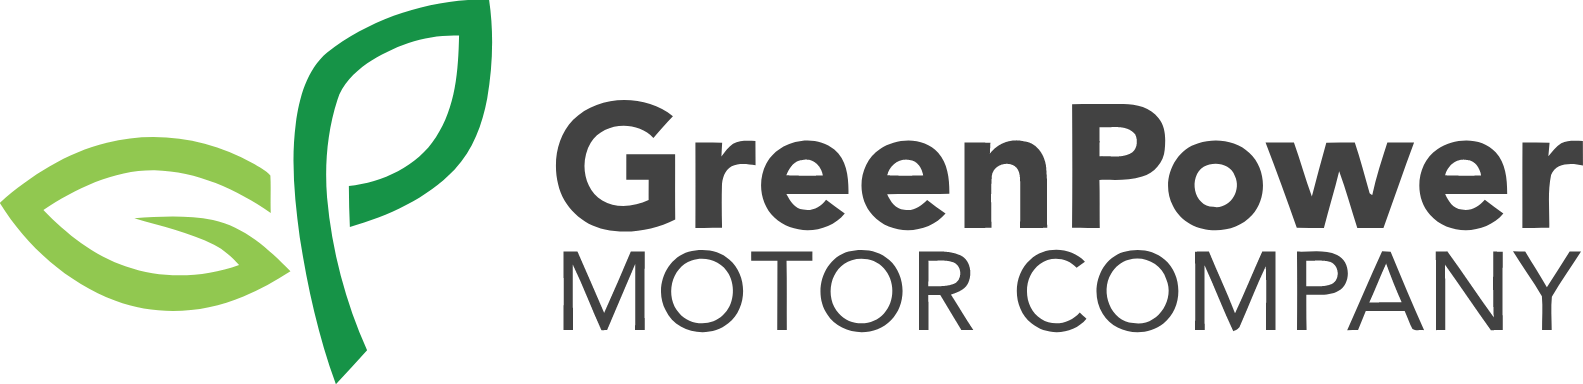 GreenPower Motor Company logo large (transparent PNG)